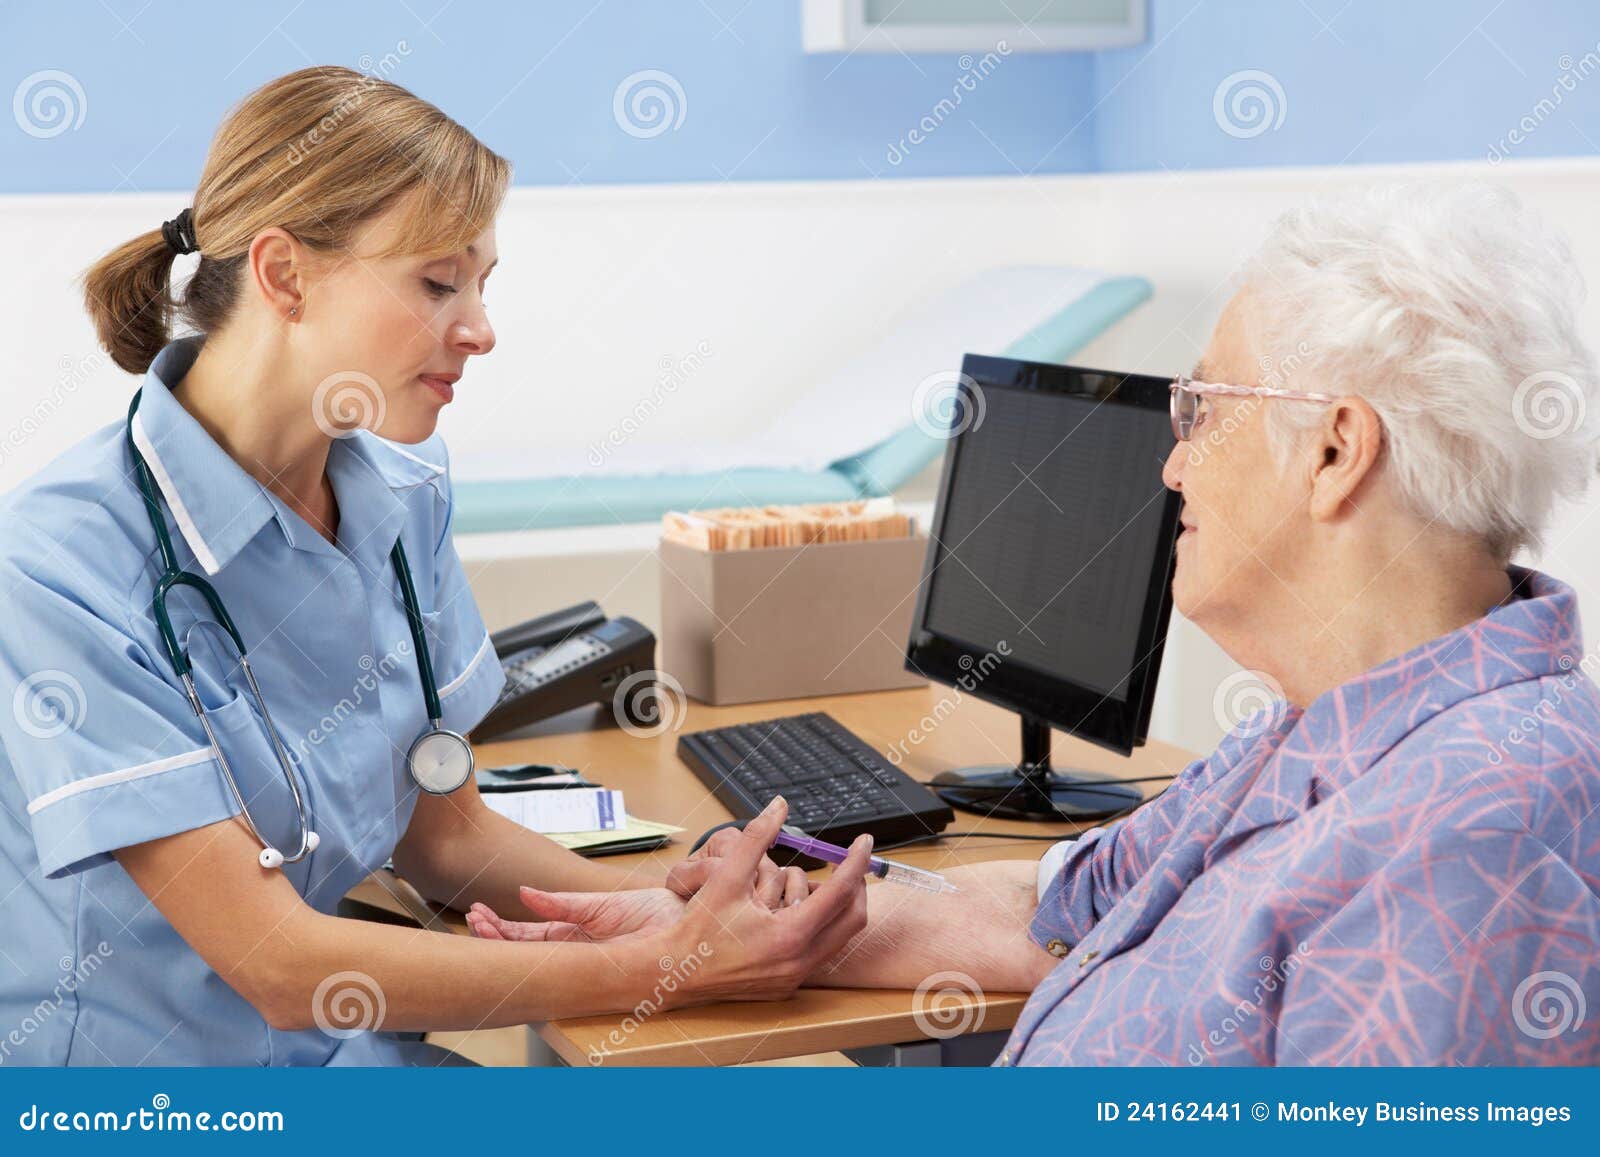 uk nurse injecting senior woman patient